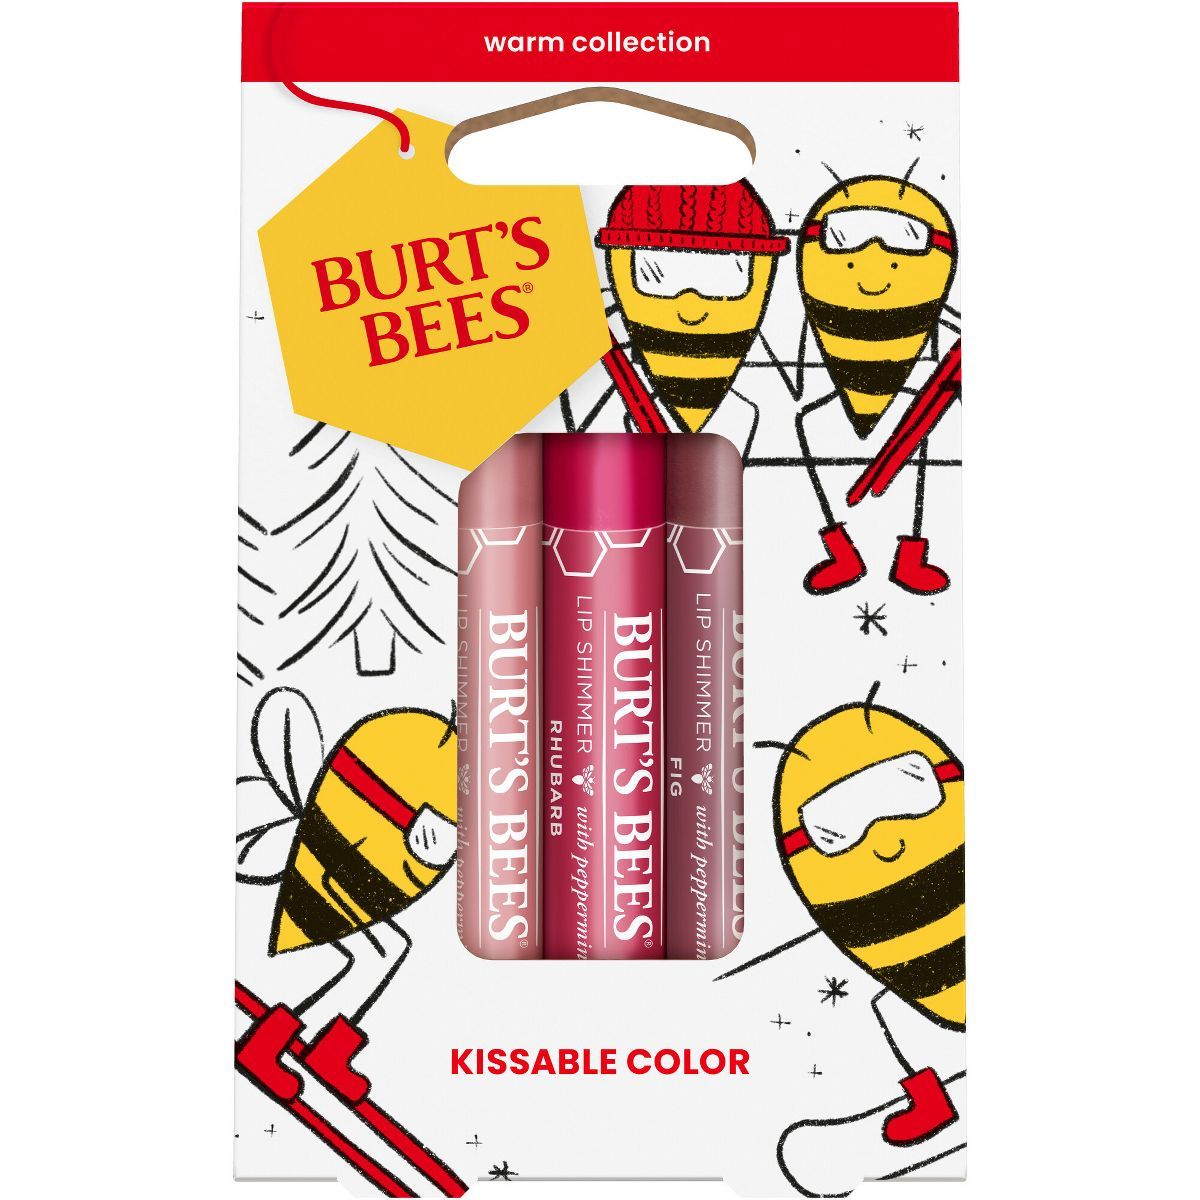 Burt's Bees Kissable Color Warm Gift Set - 3pc | Target